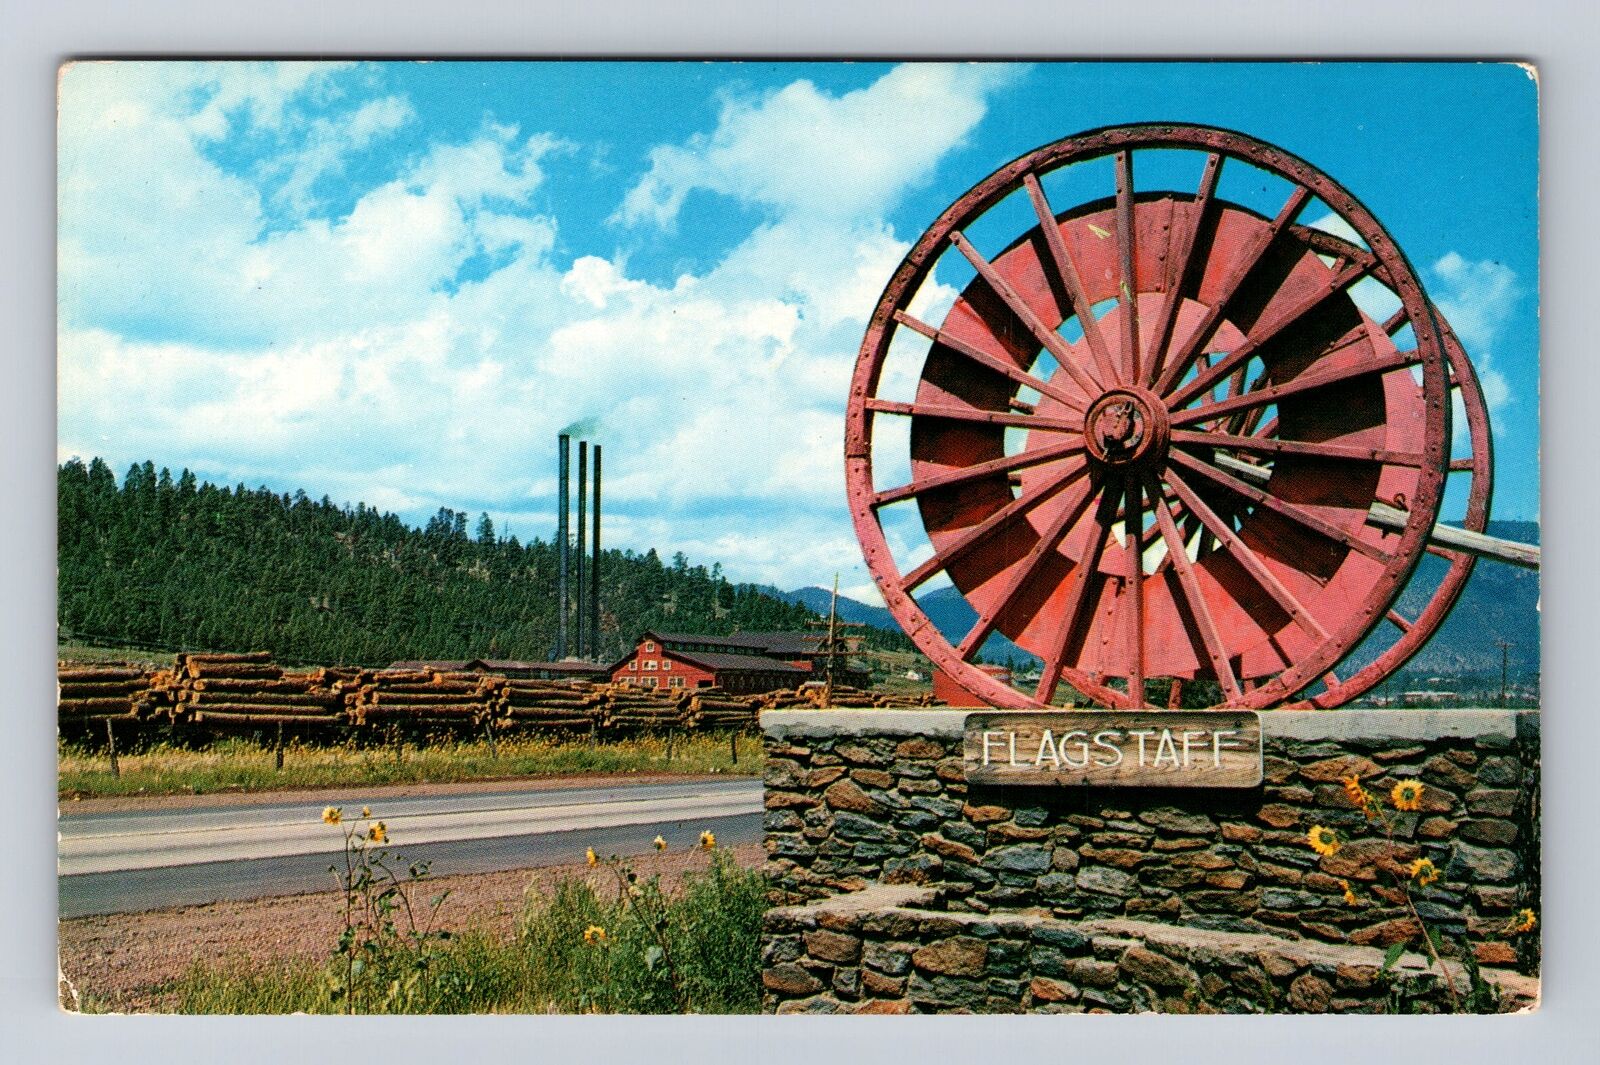 Flagstaff AZ-Arizona, Giant Logging Wheels at Western Entrance, Vintage Postcard